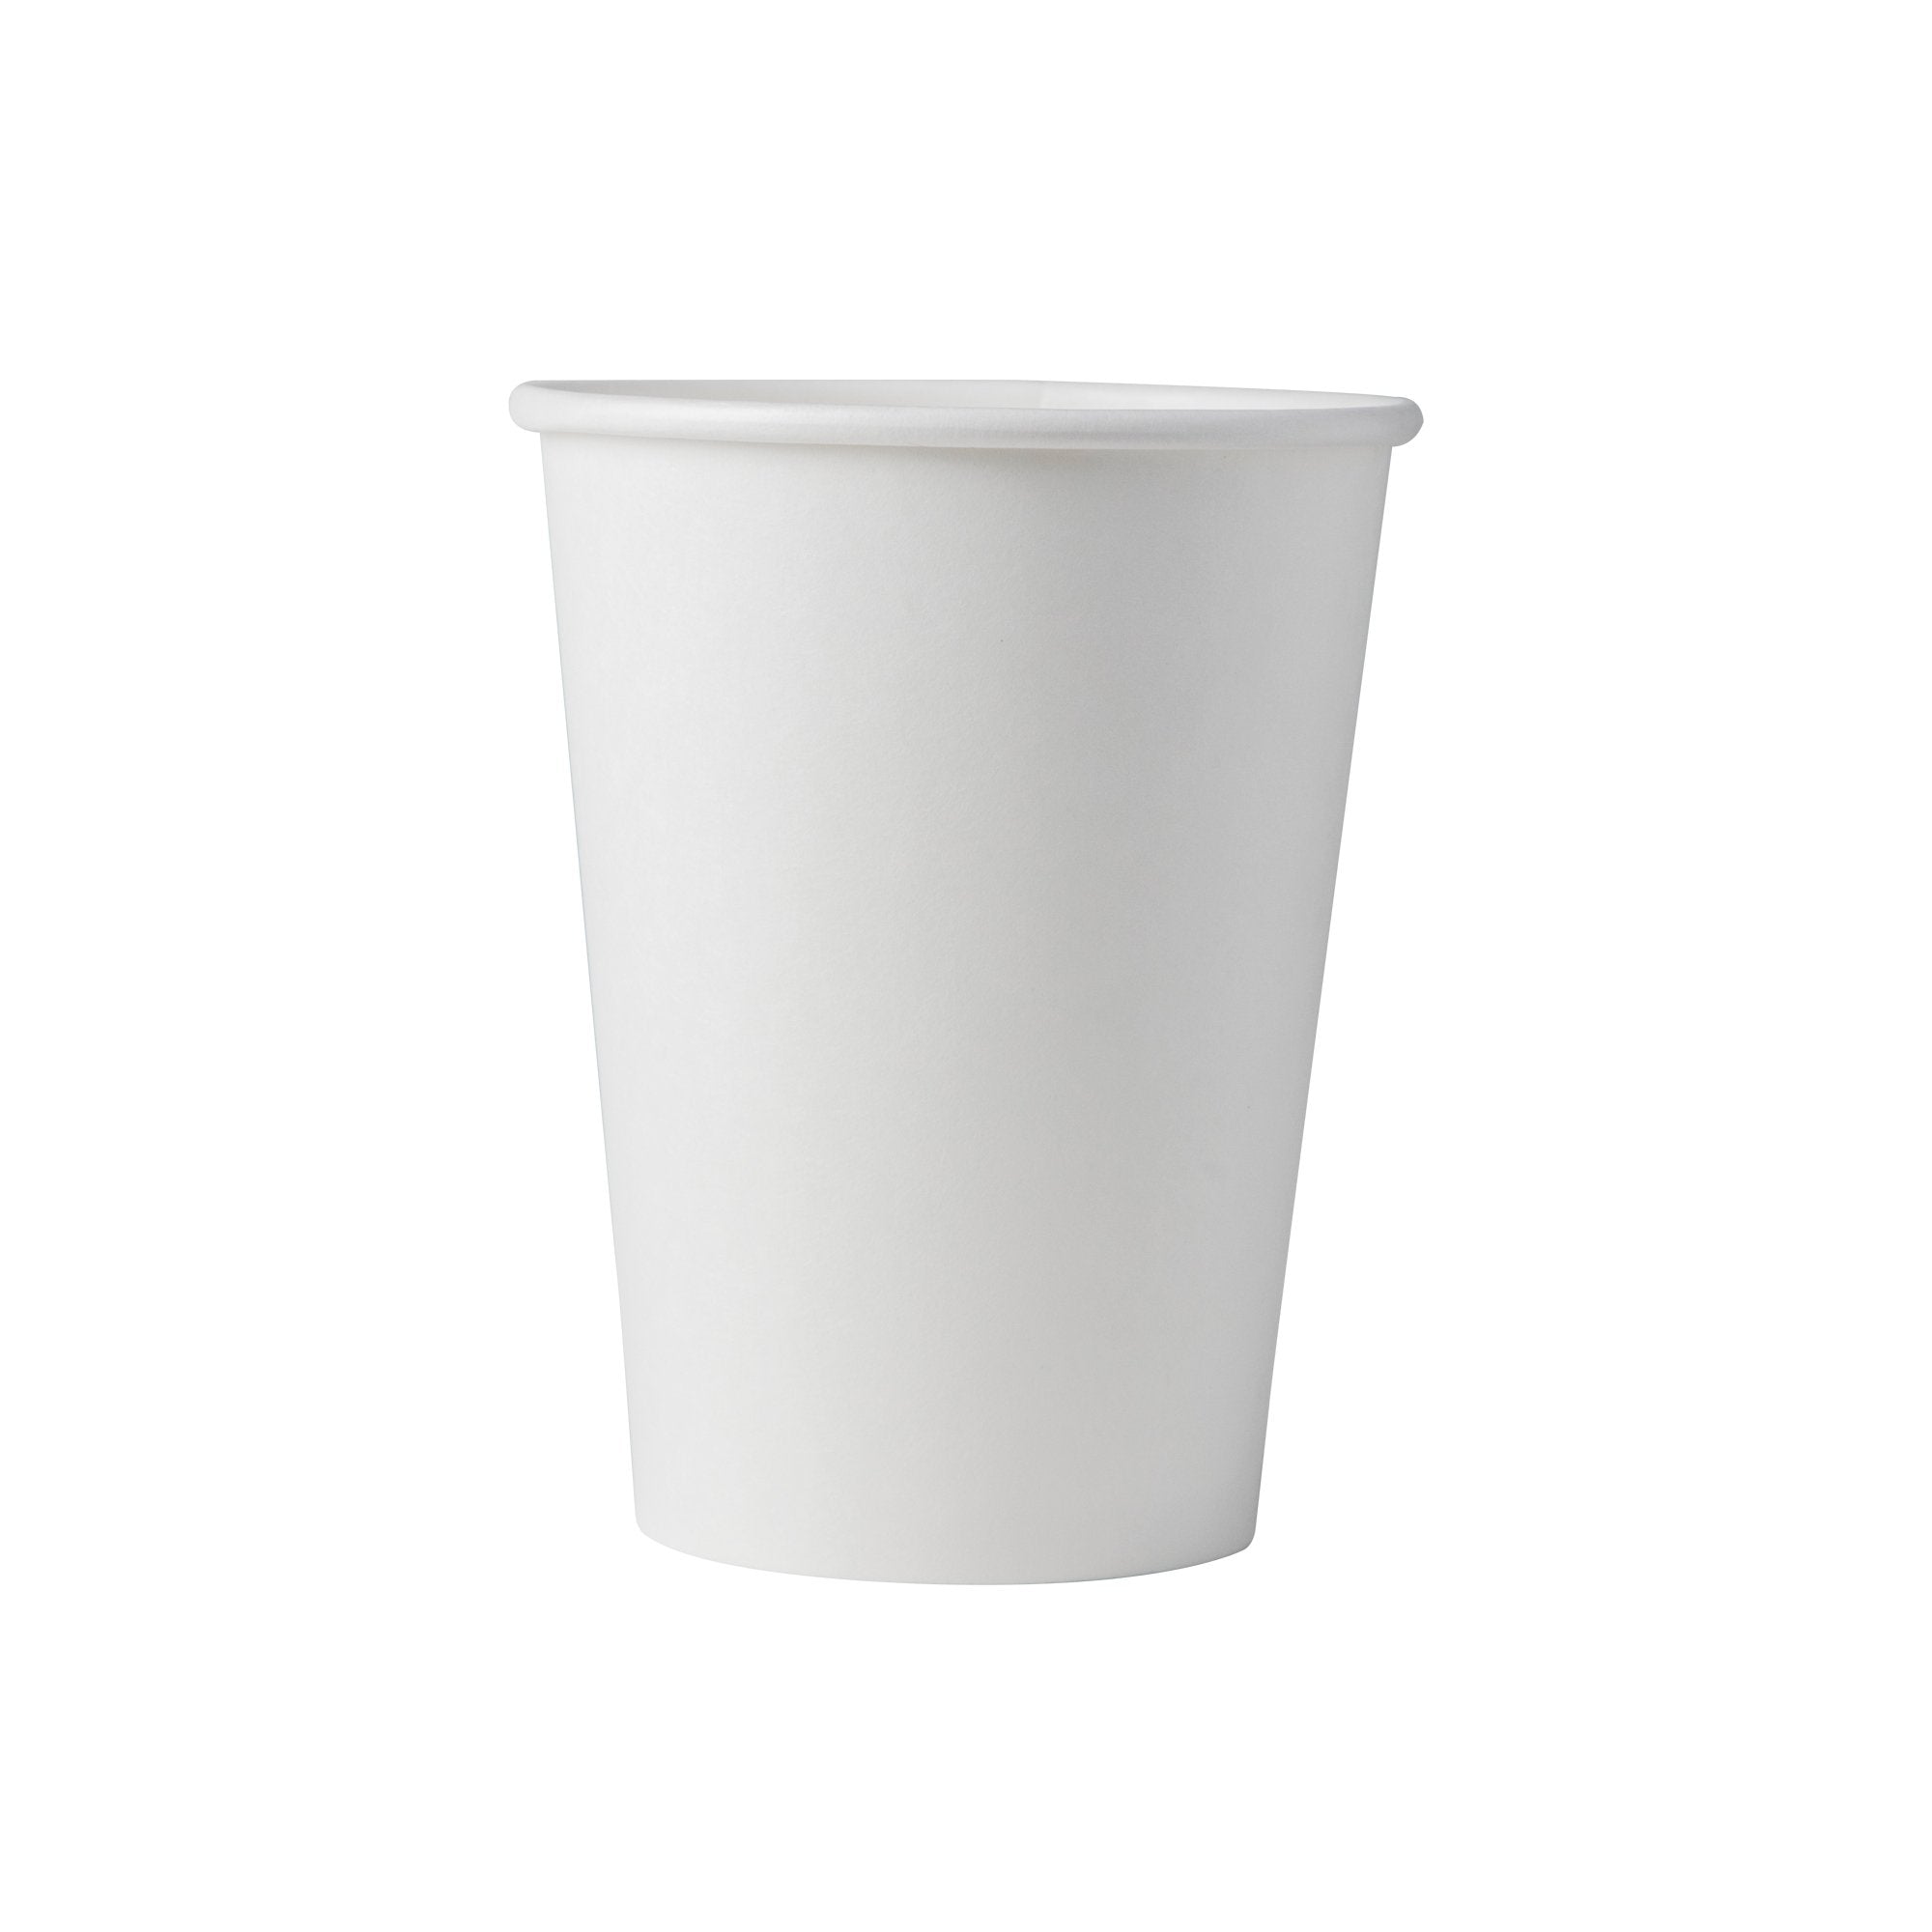 12 oz Hot Paper Cups Plain White, 1000 ct